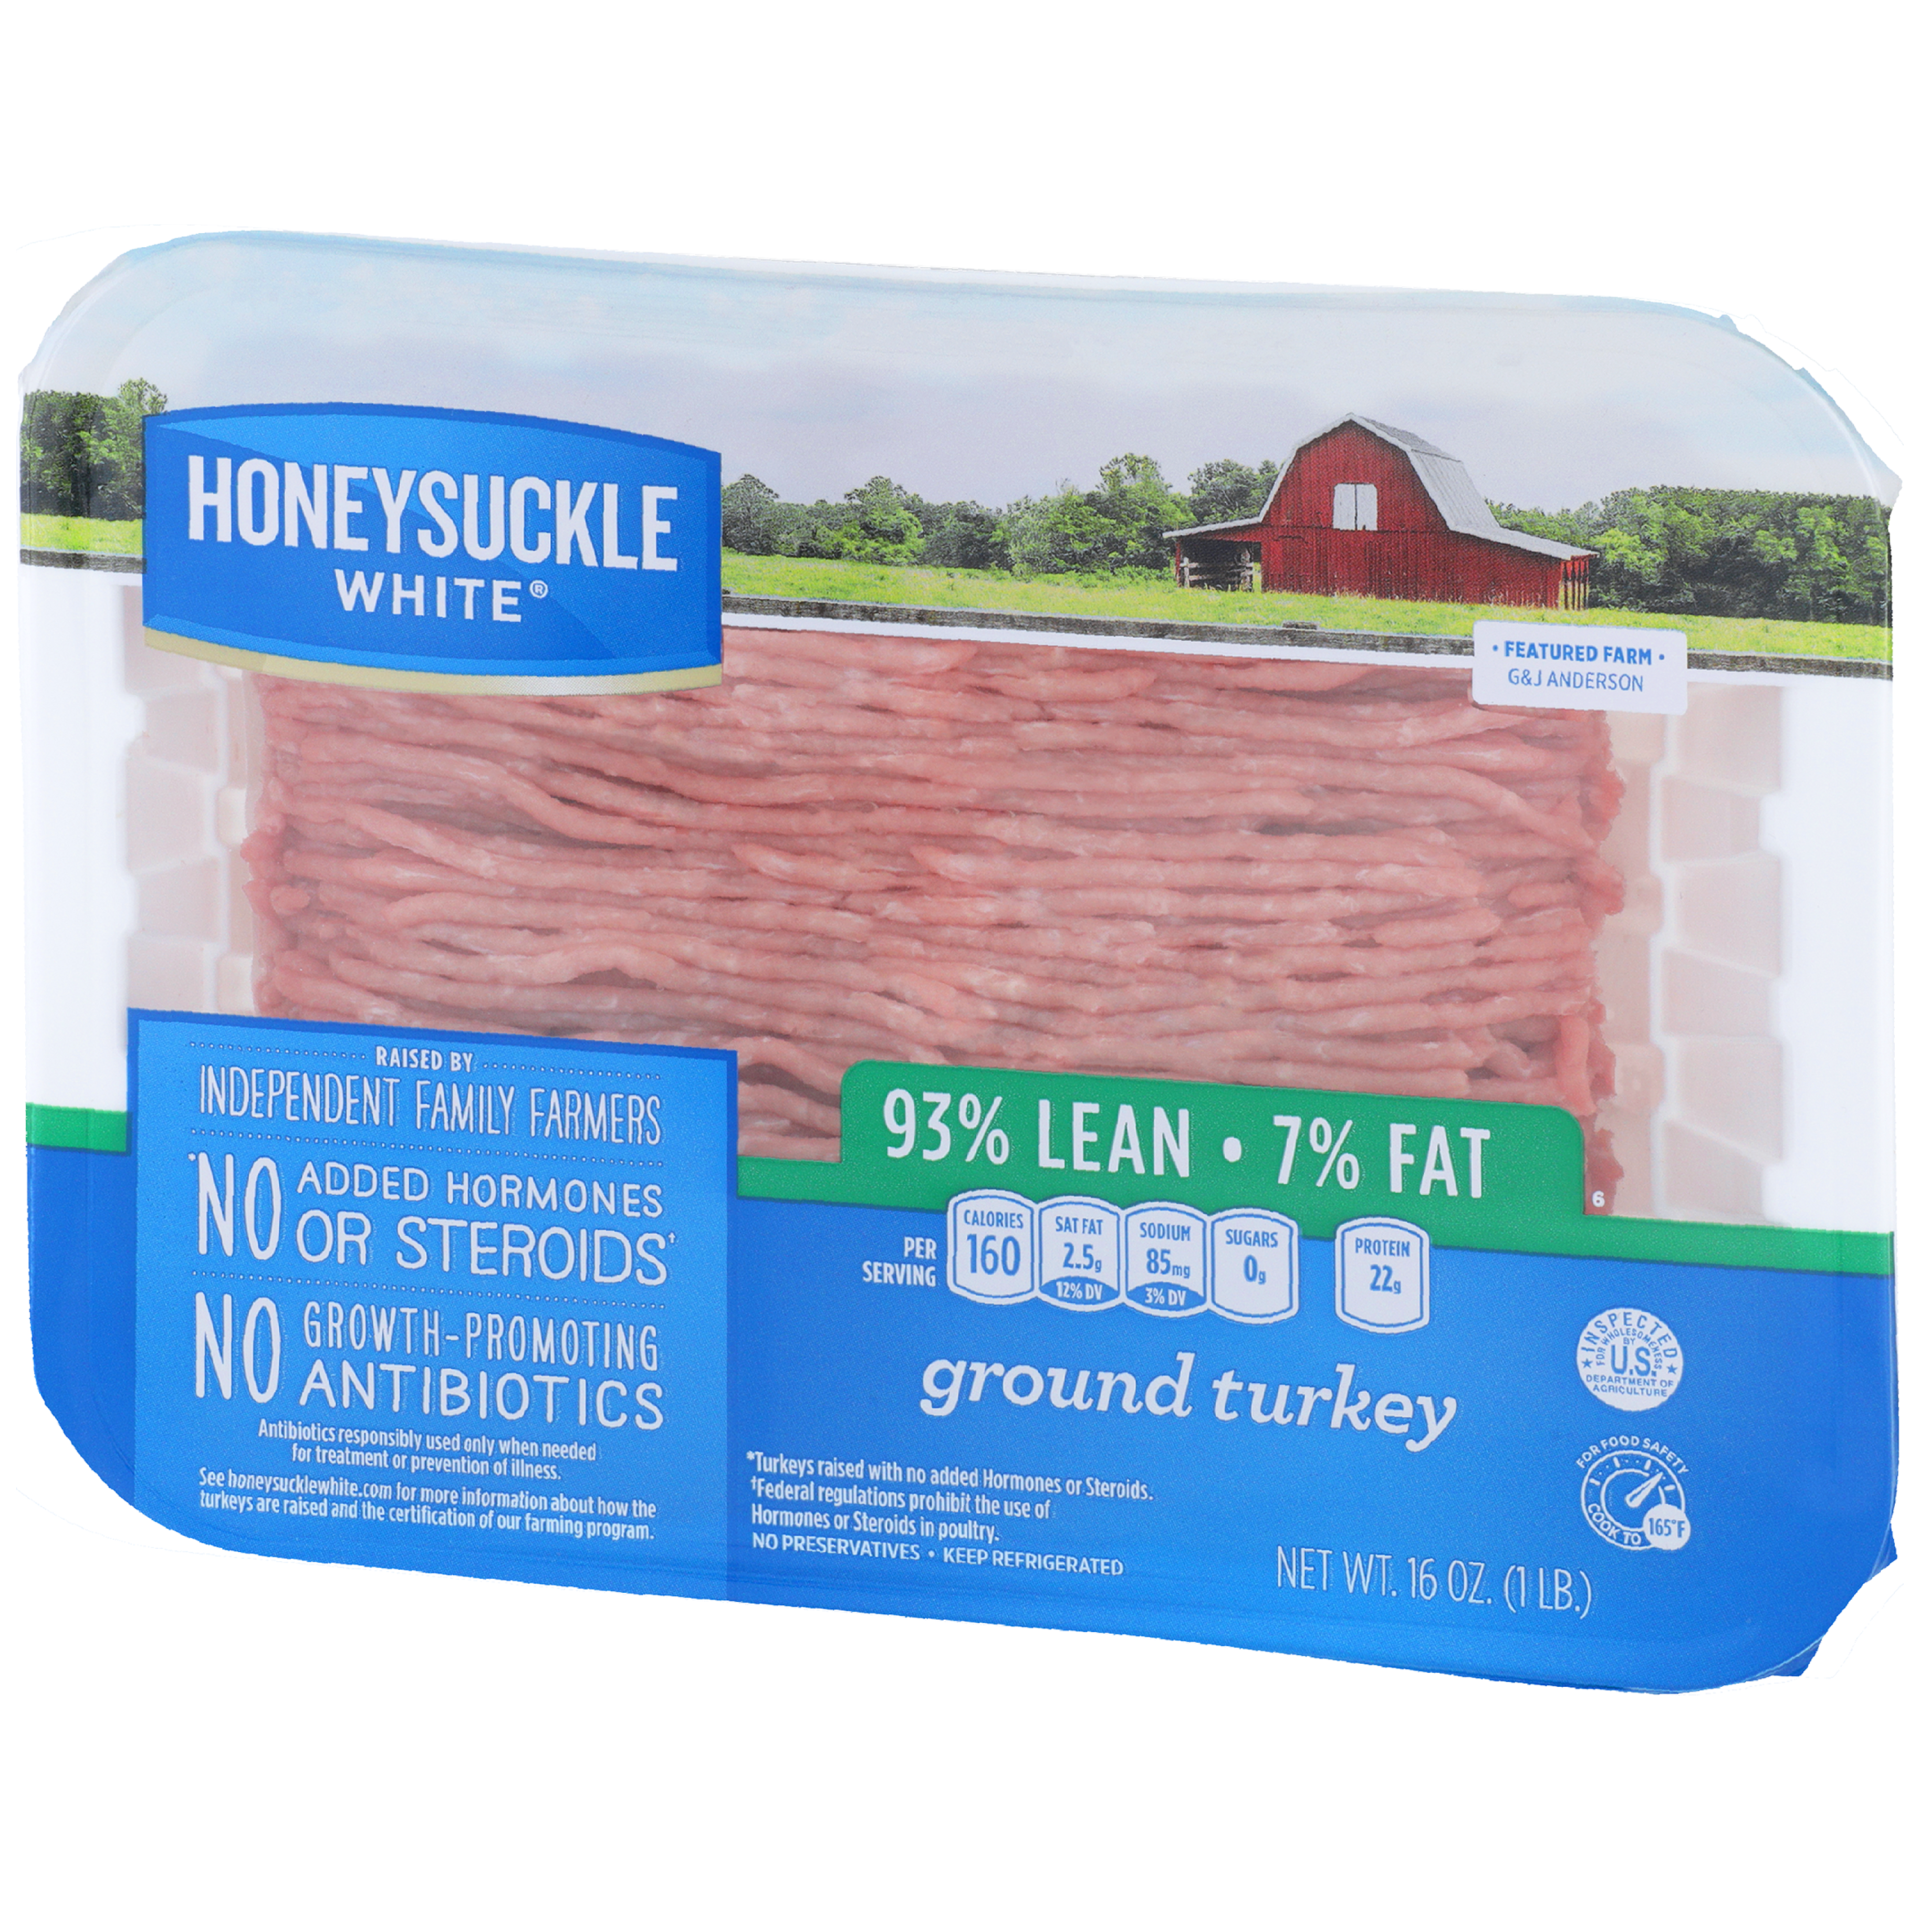 slide 14 of 50, Honeysuckle White 93% Lean Fat Ground Turkey Tray, 16 oz